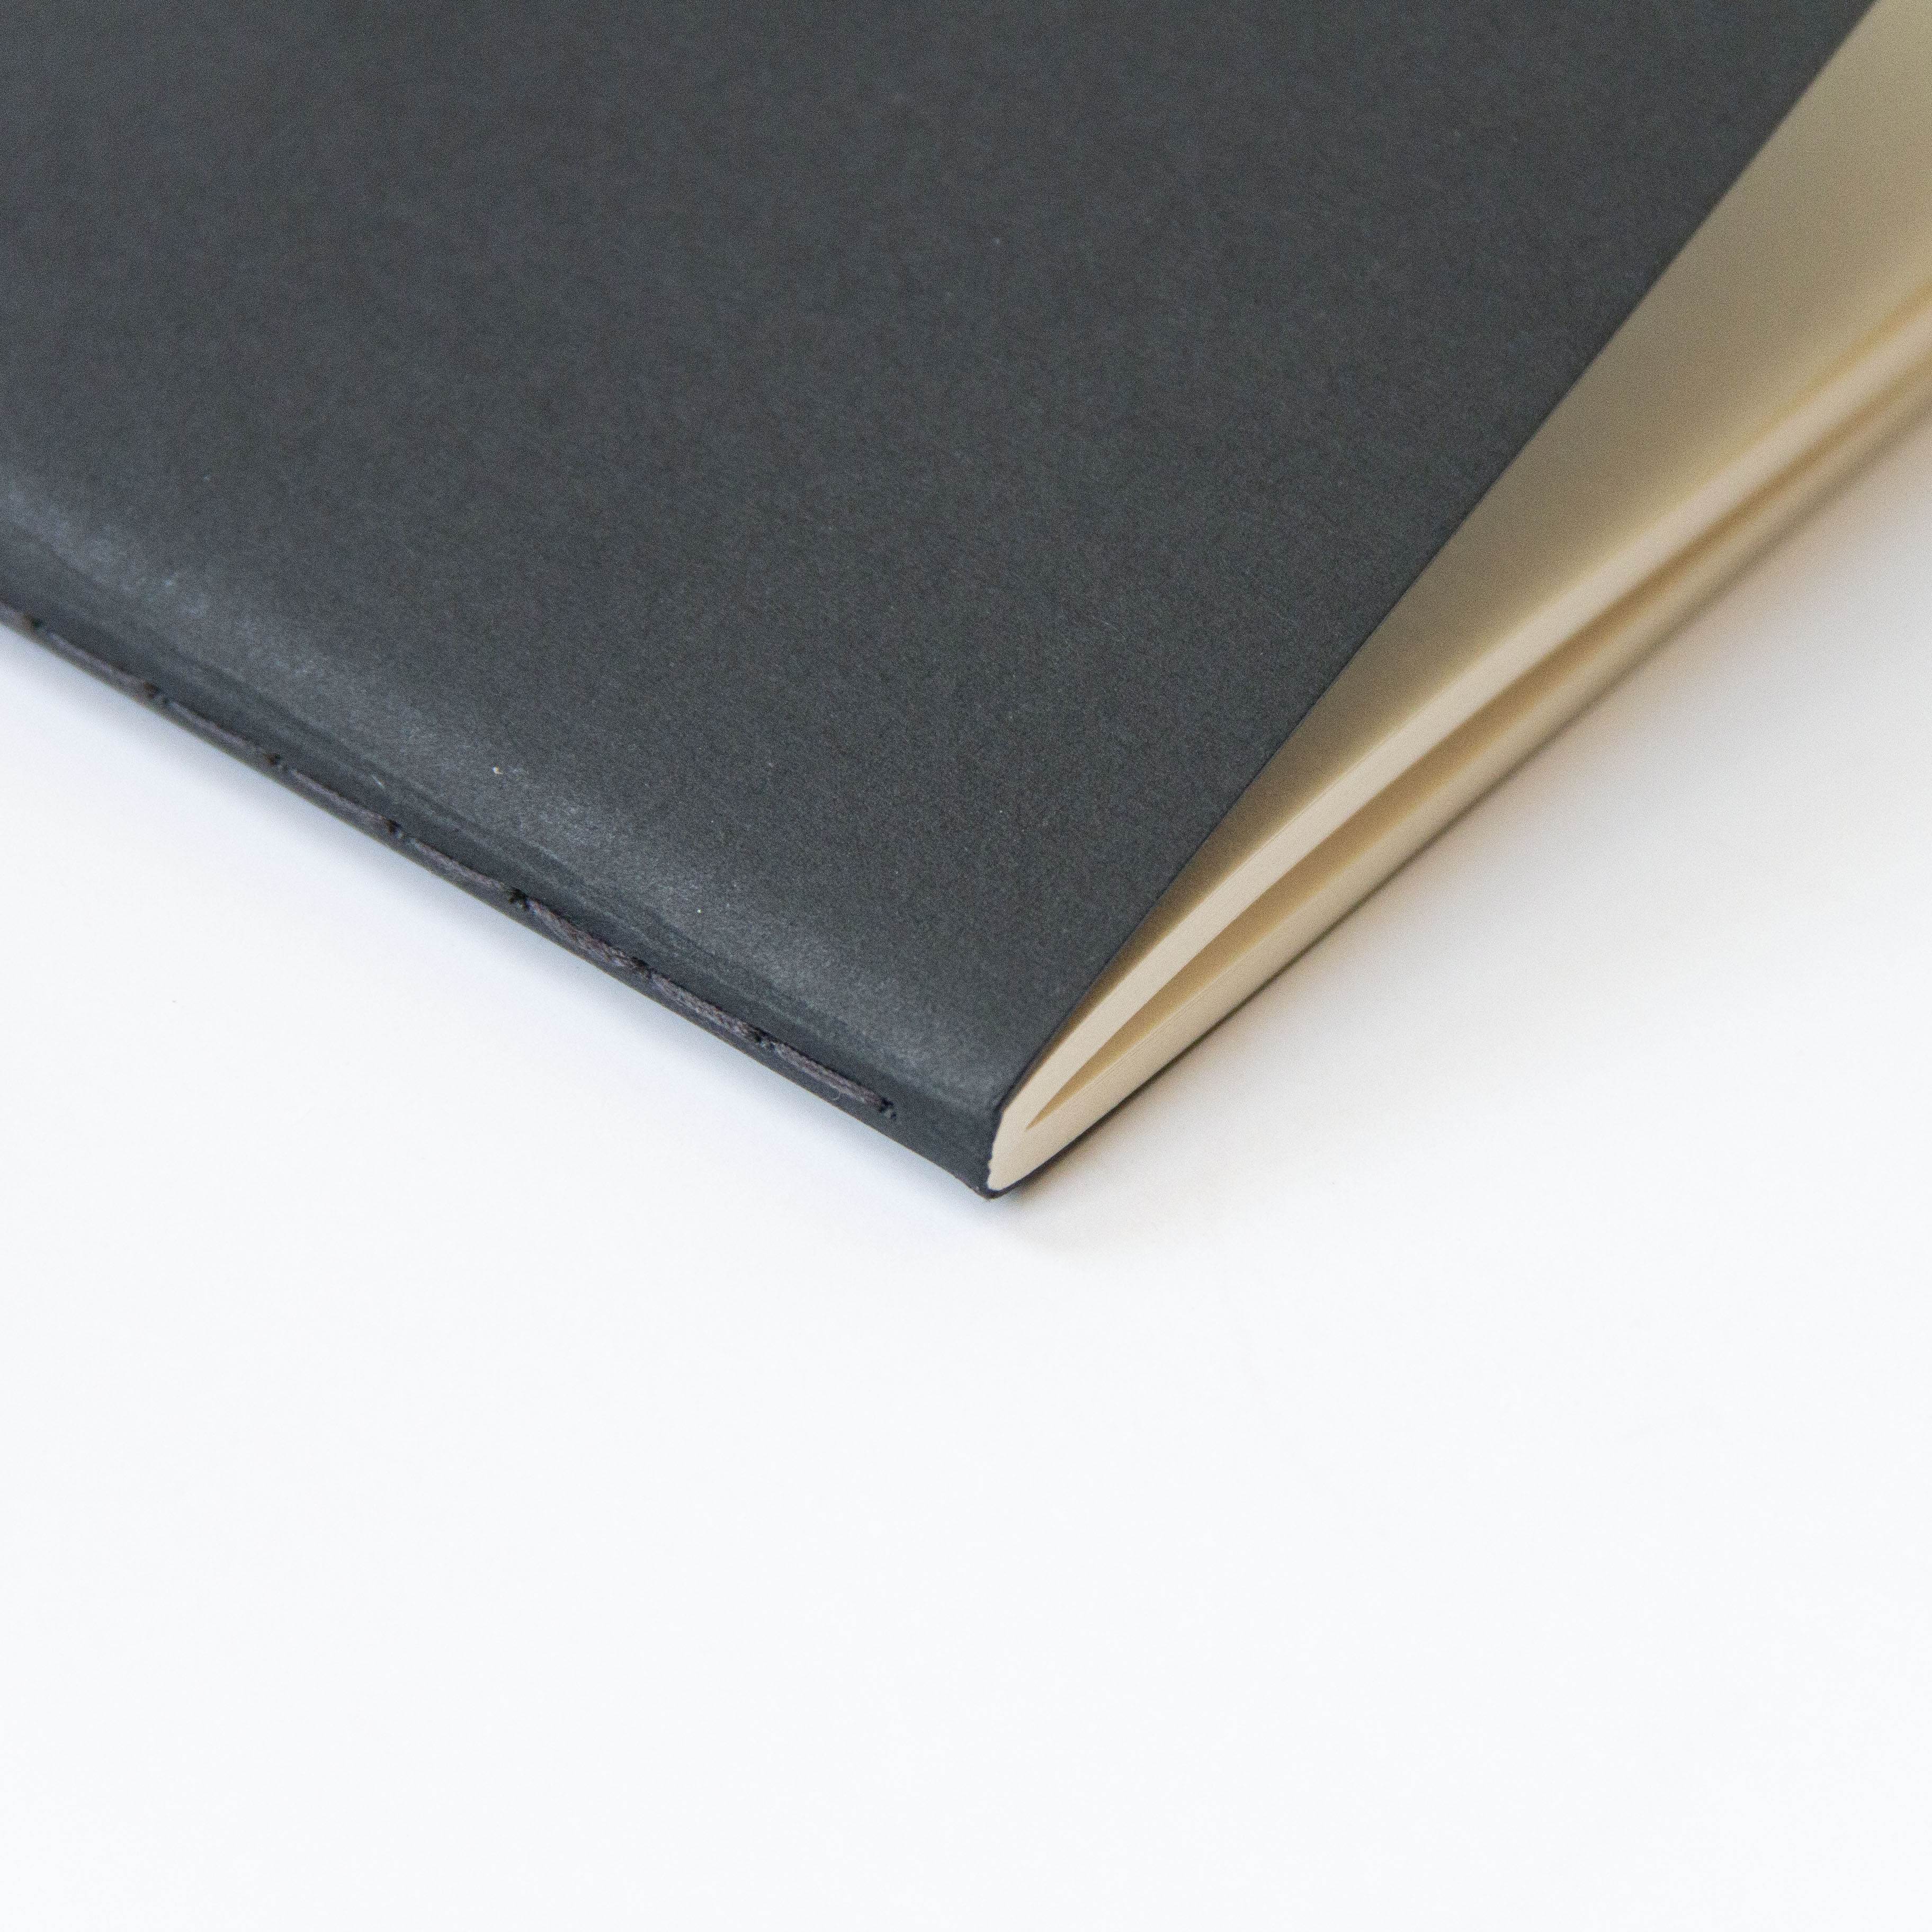 OCTÀGON DESIGN | &quot;Black&quot; notebook details. Binding with black thread.